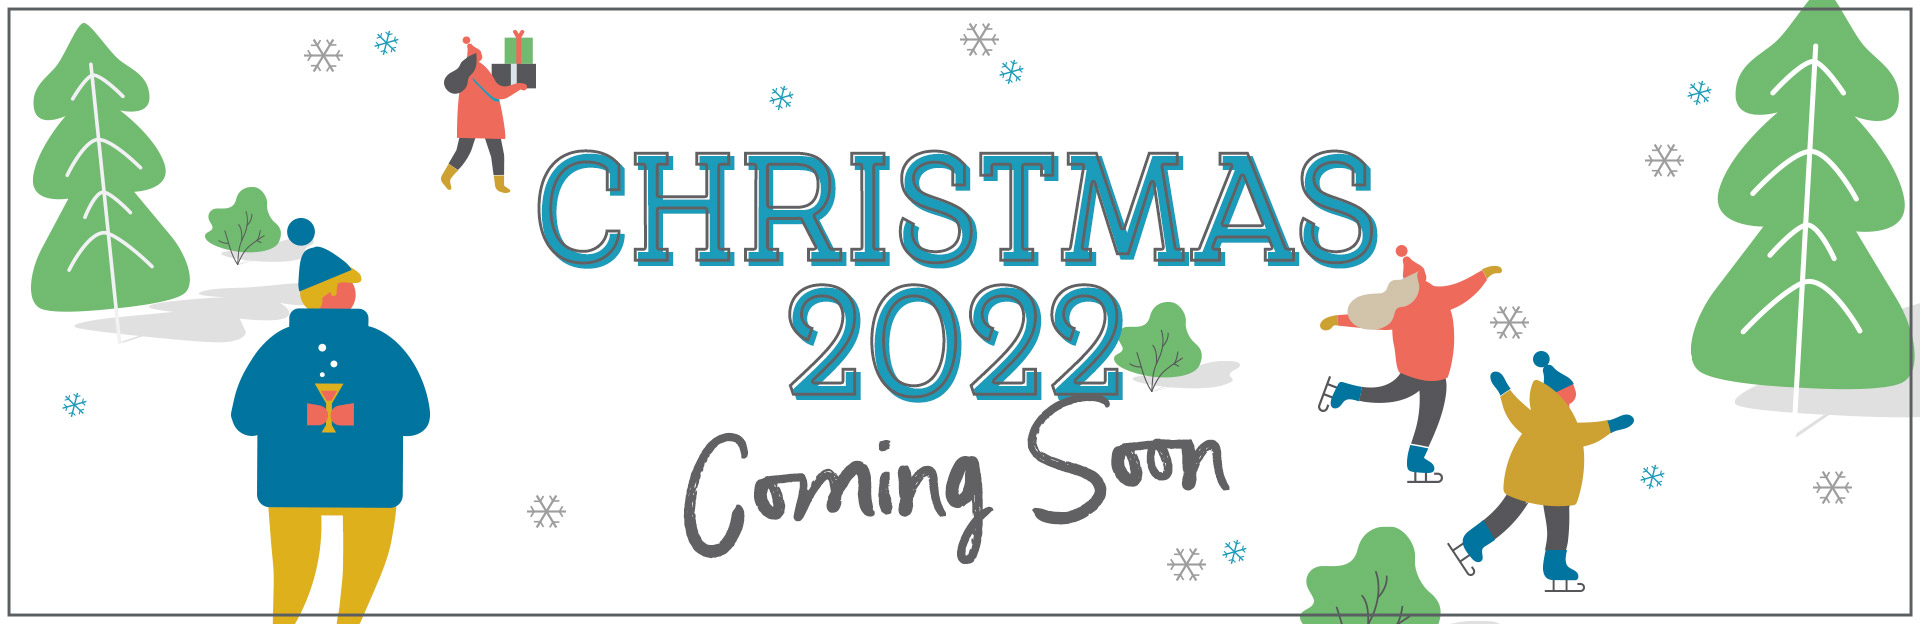 New Christmas Day Menu 2021 | PCT Test Lab